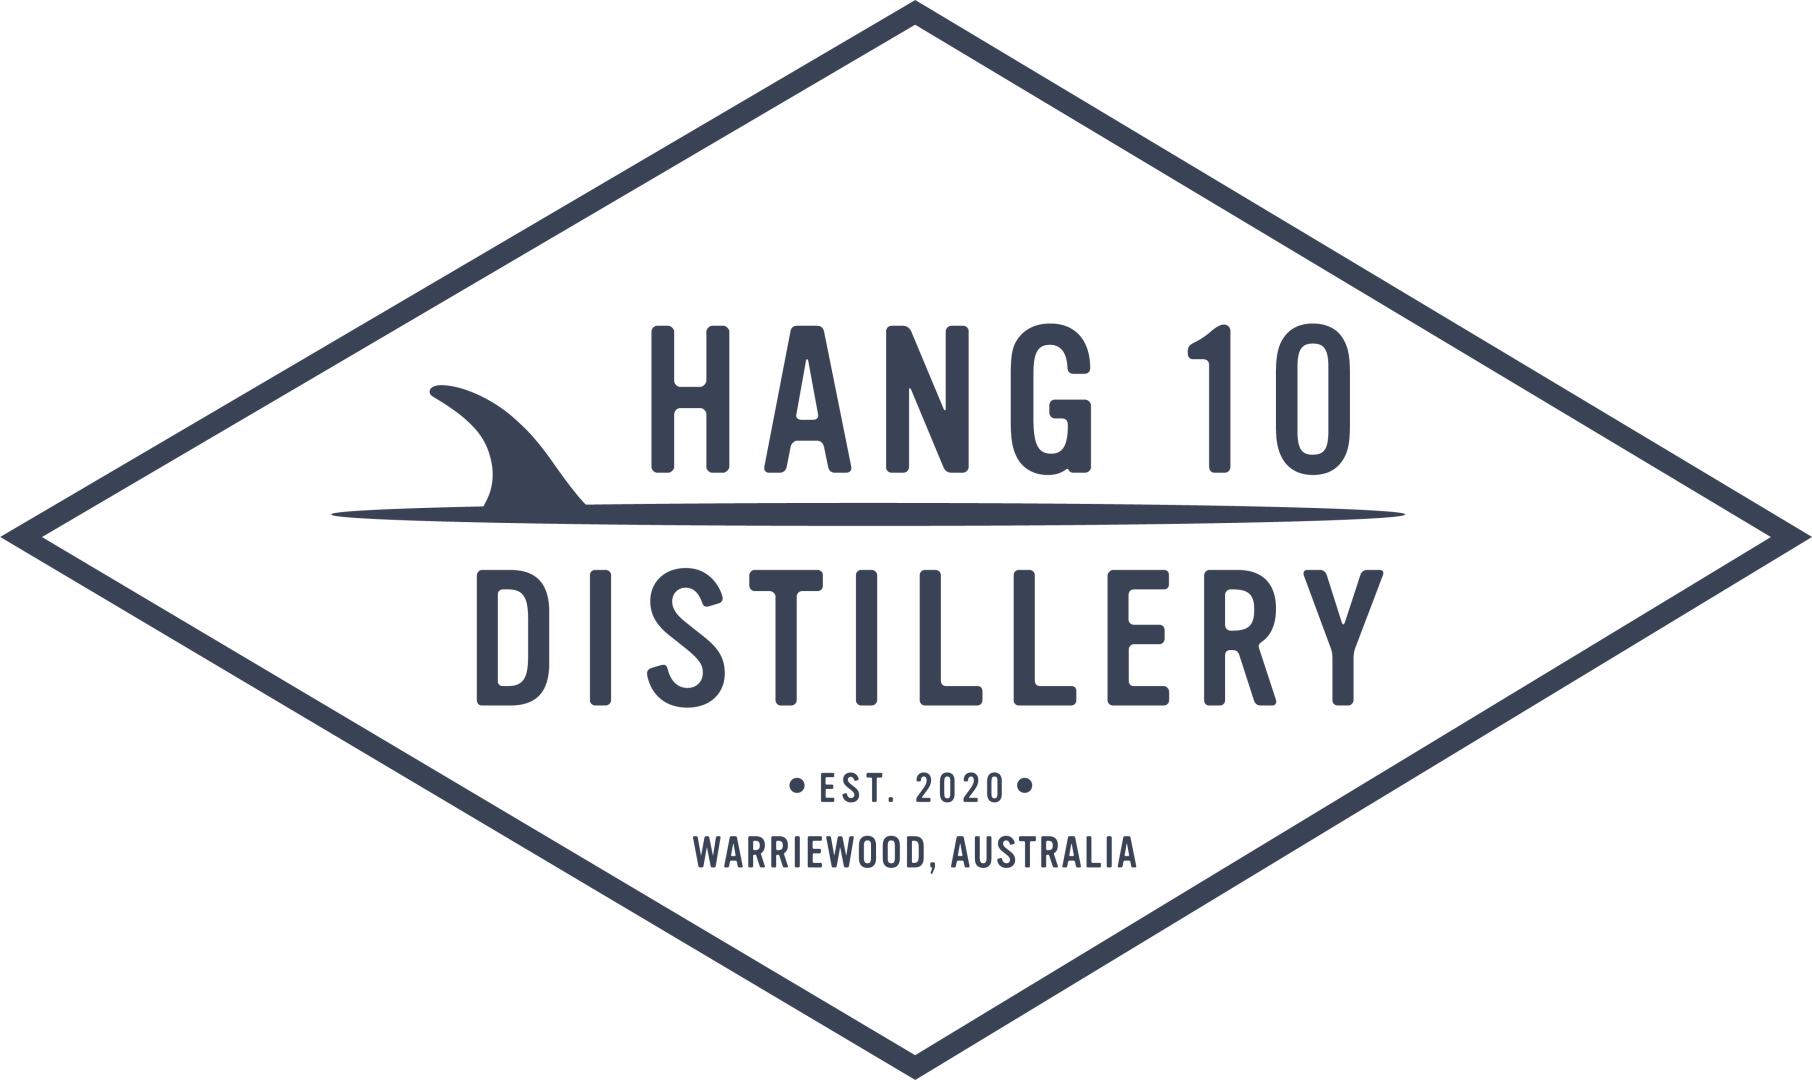 Hang 10 Distillery logo